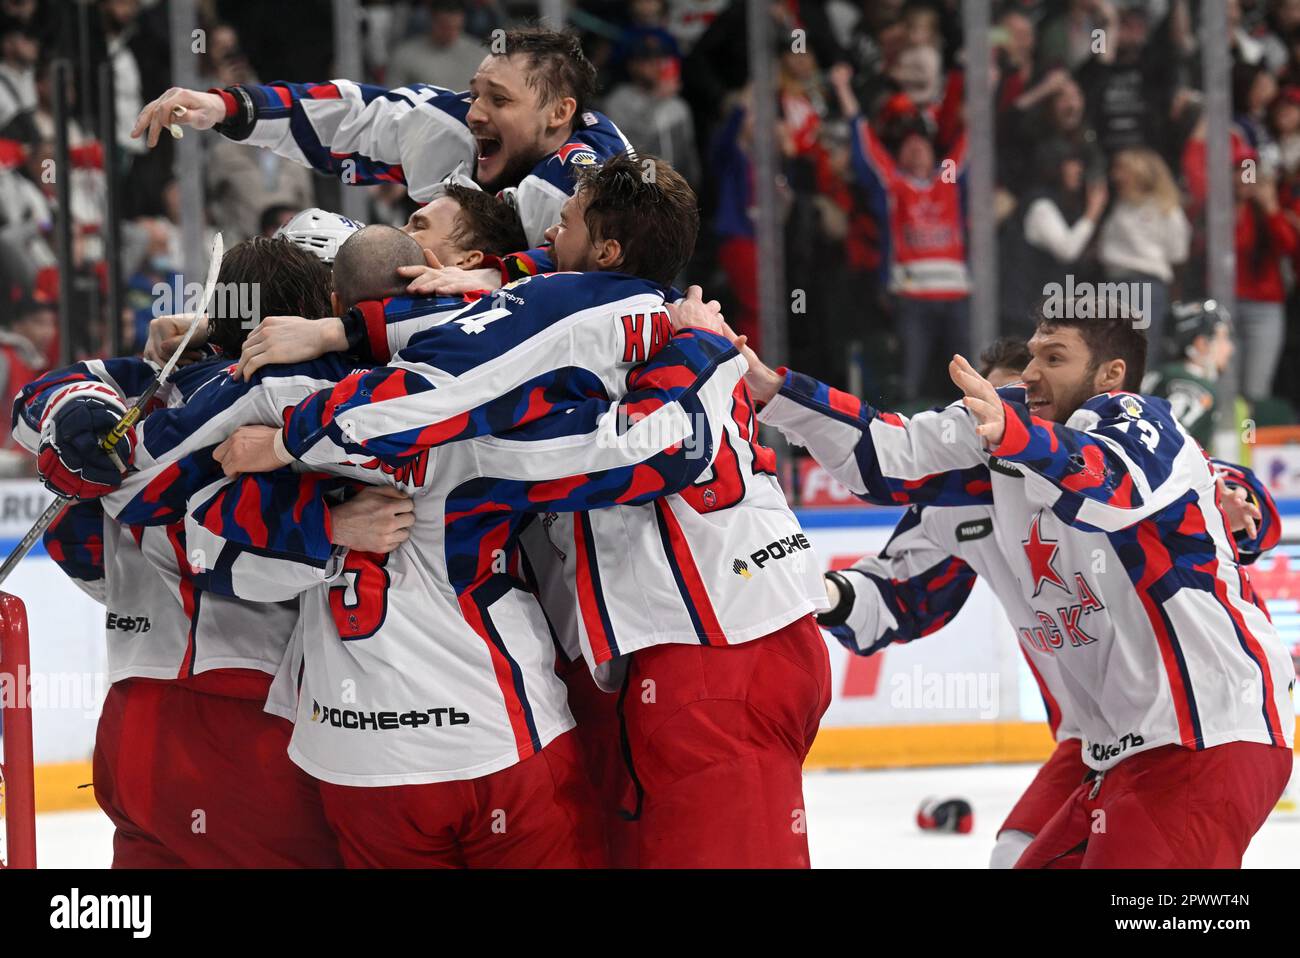 Kazan, Russia. 29th Apr, 2023. Continental Hockey League (KHL). Championship season 2022/23. Playoffs of the Gagarin Cup. The final